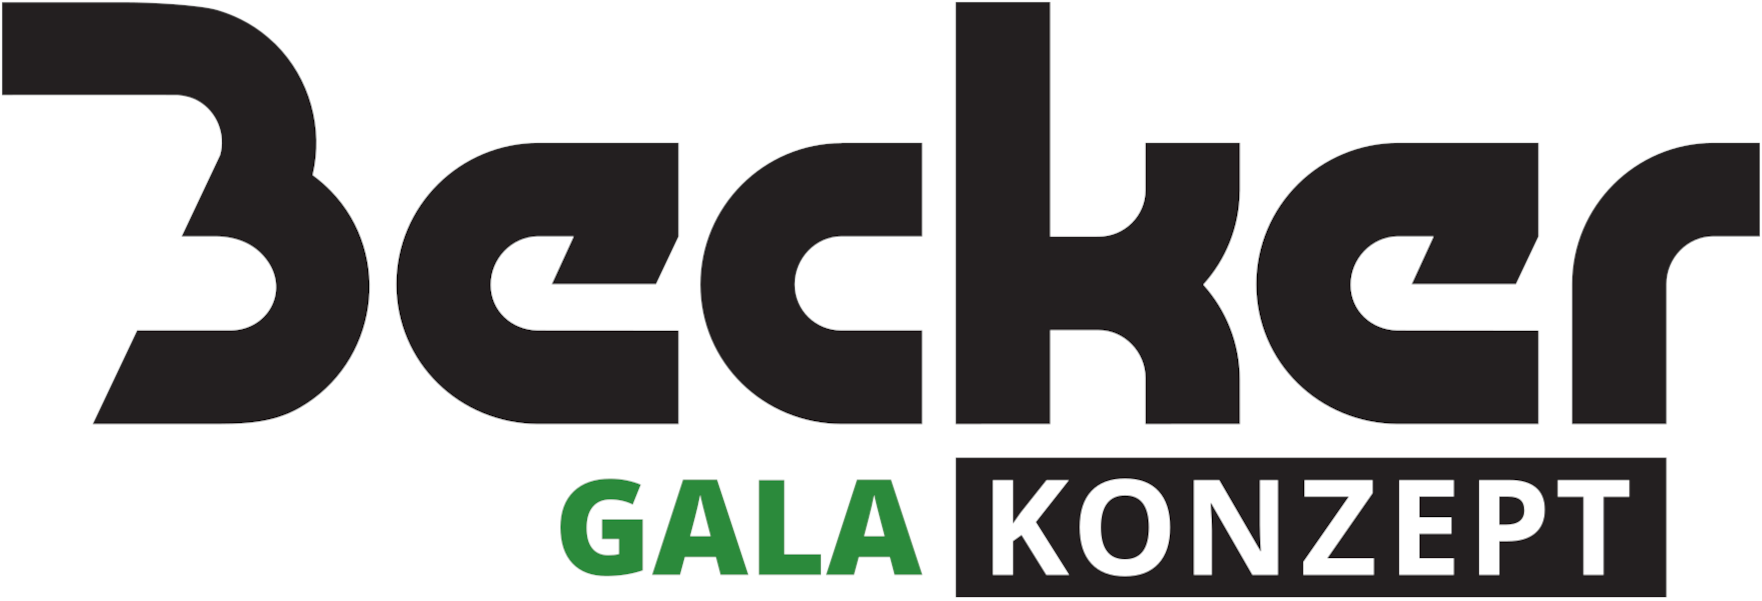 Becker GaLa Konzept Logo